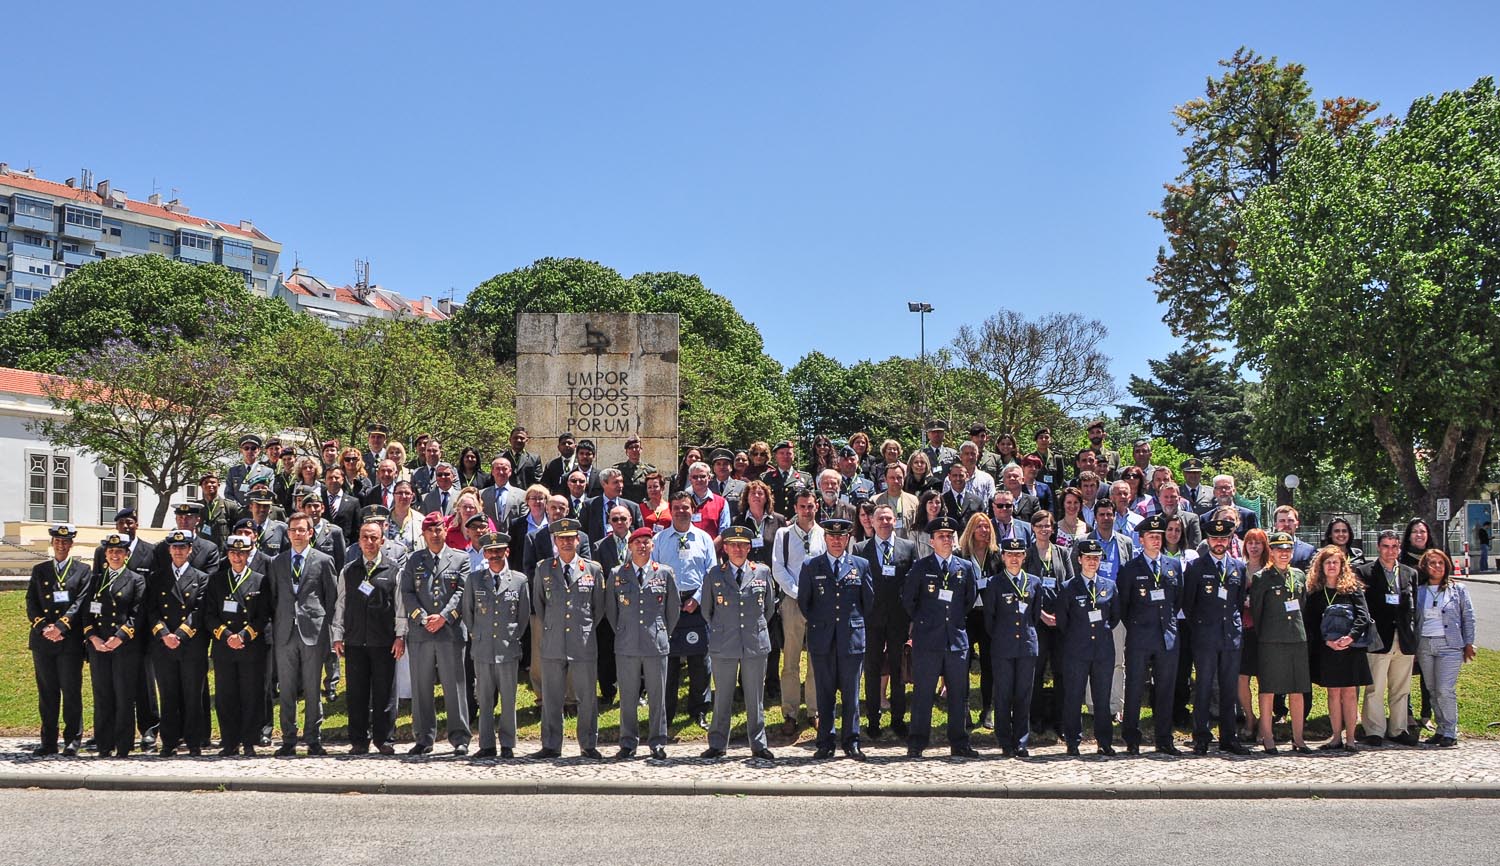 Group photo of IAMPS 2015